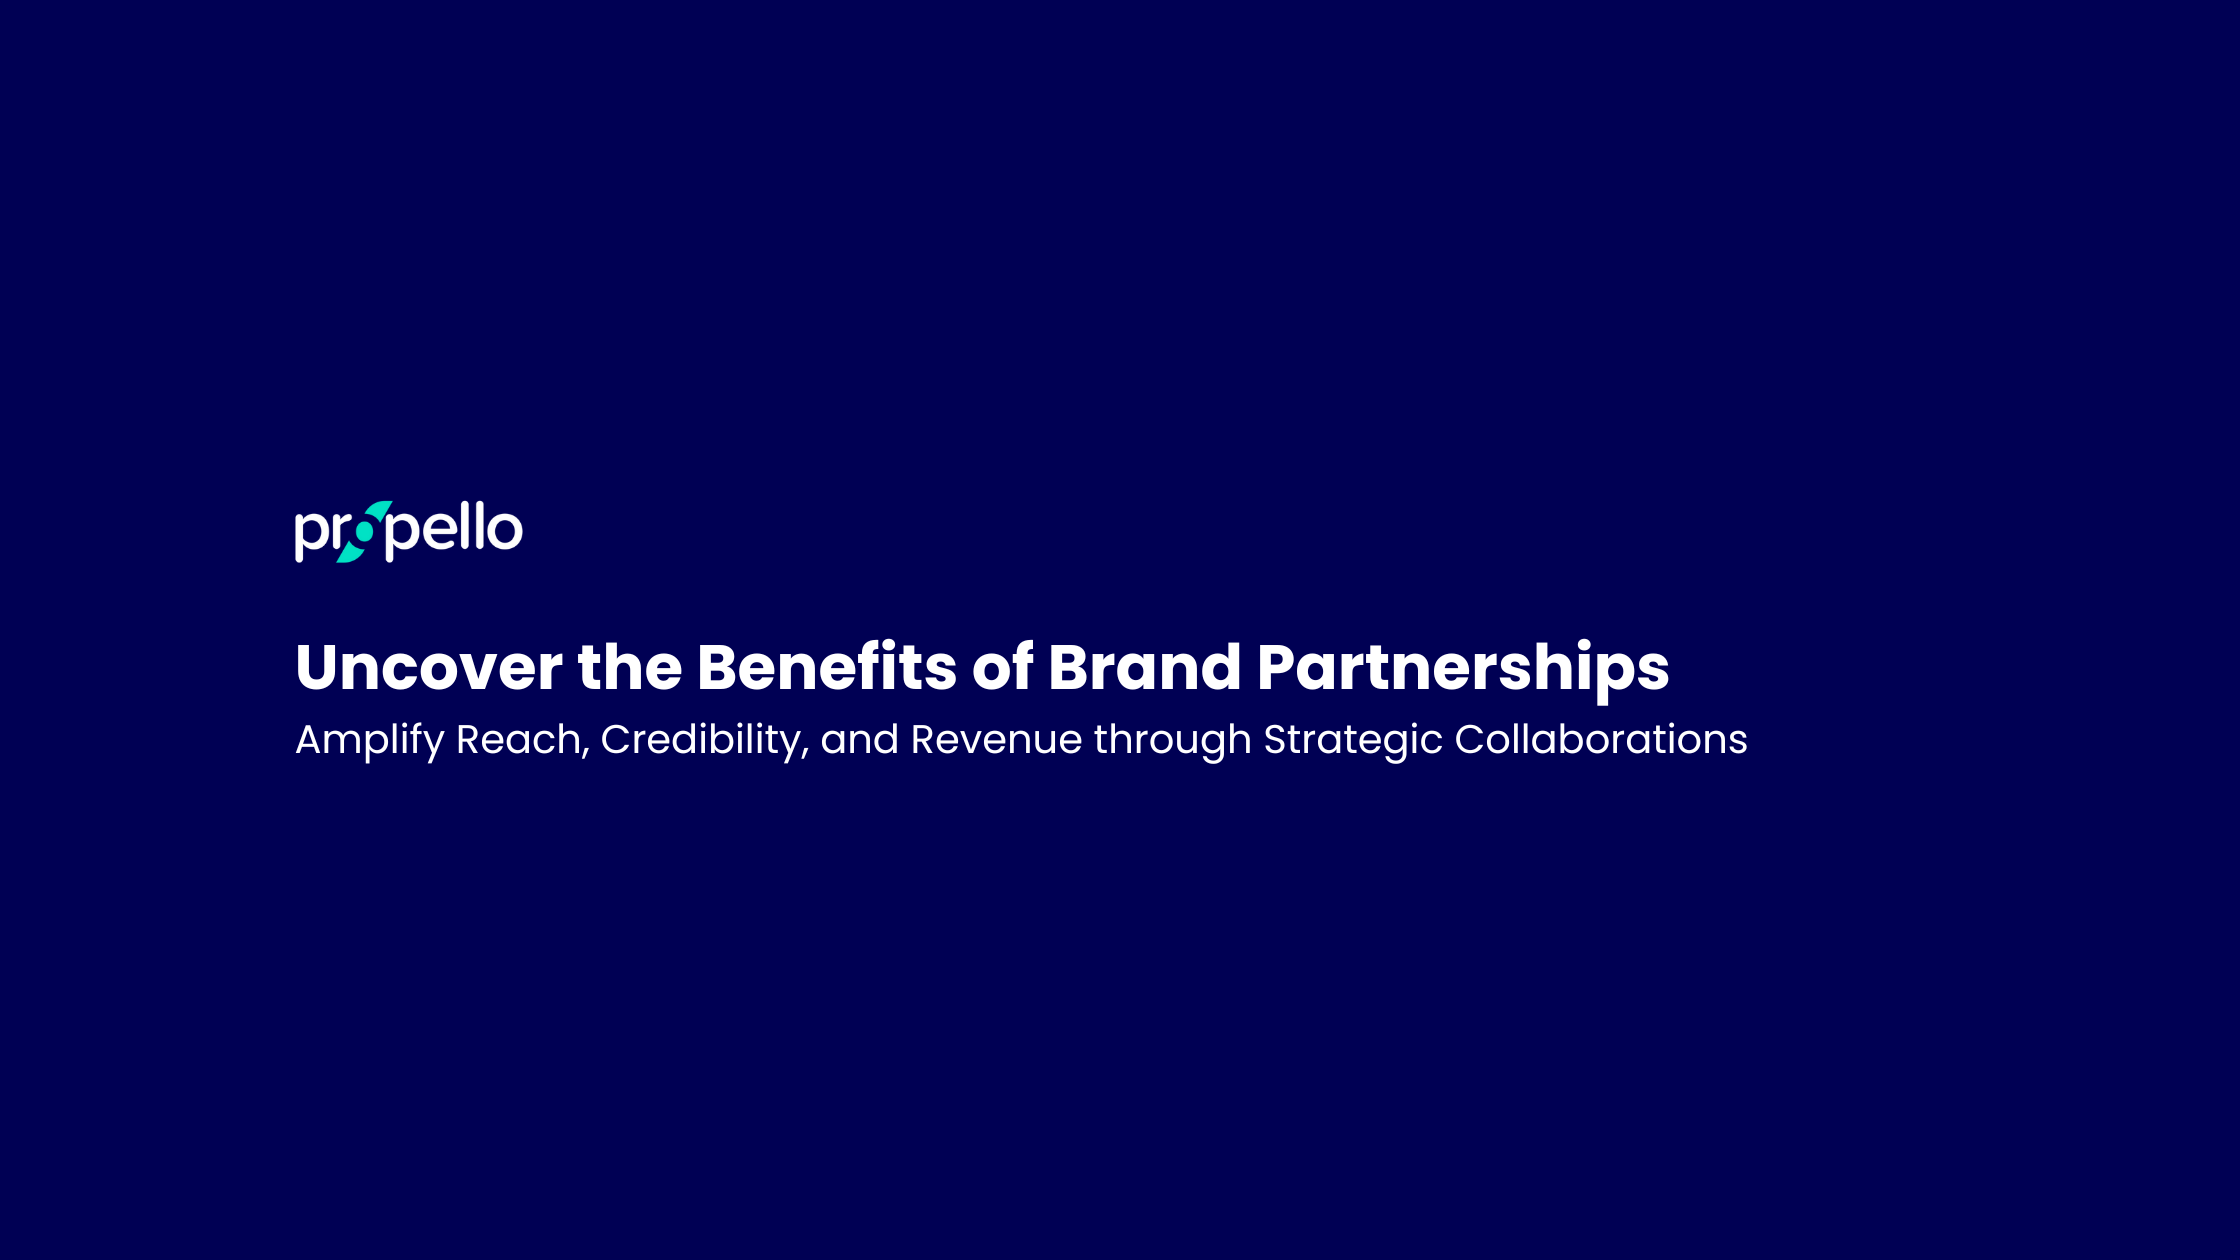 Benefits of Brand Partnerships